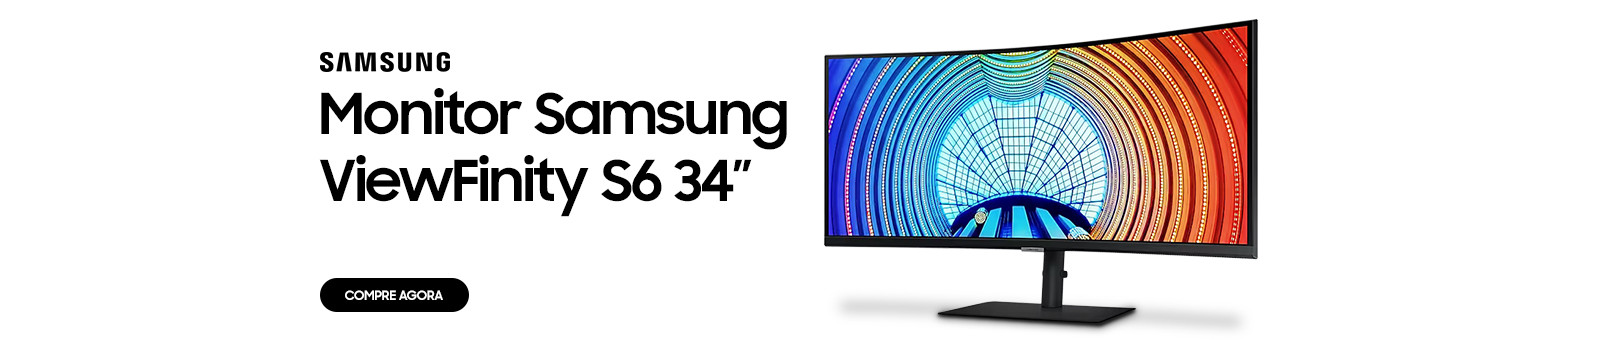 Monitor Samsung viweFinity S6 34"